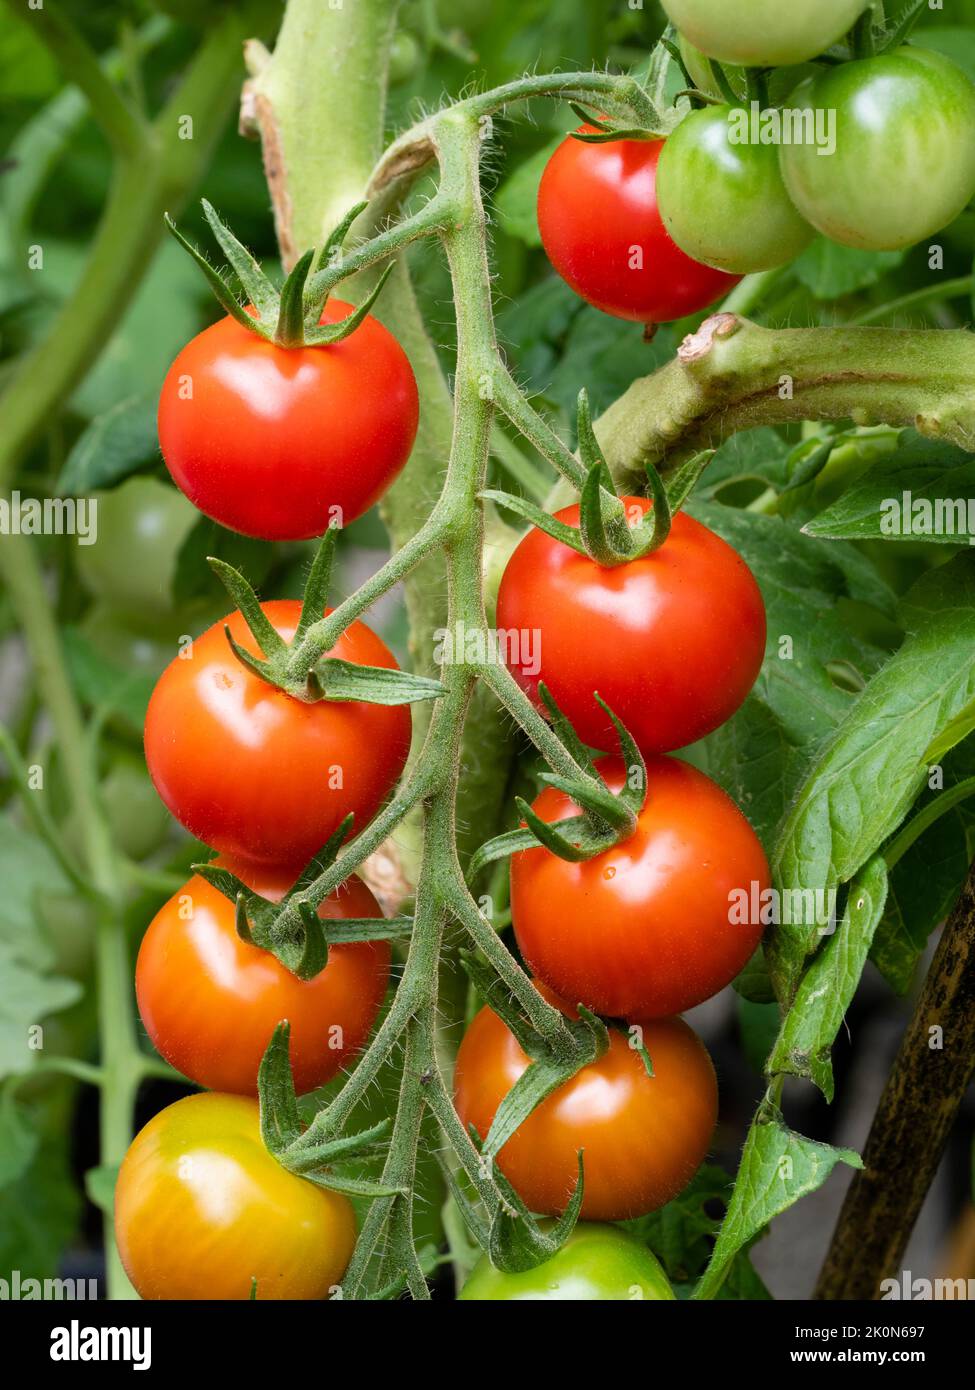 Rosso maturo, pomodori ciliegini maturi e non maturi, Solanum lycopersicum 'Gardener's Delight' in una stagione estiva successiva Foto Stock